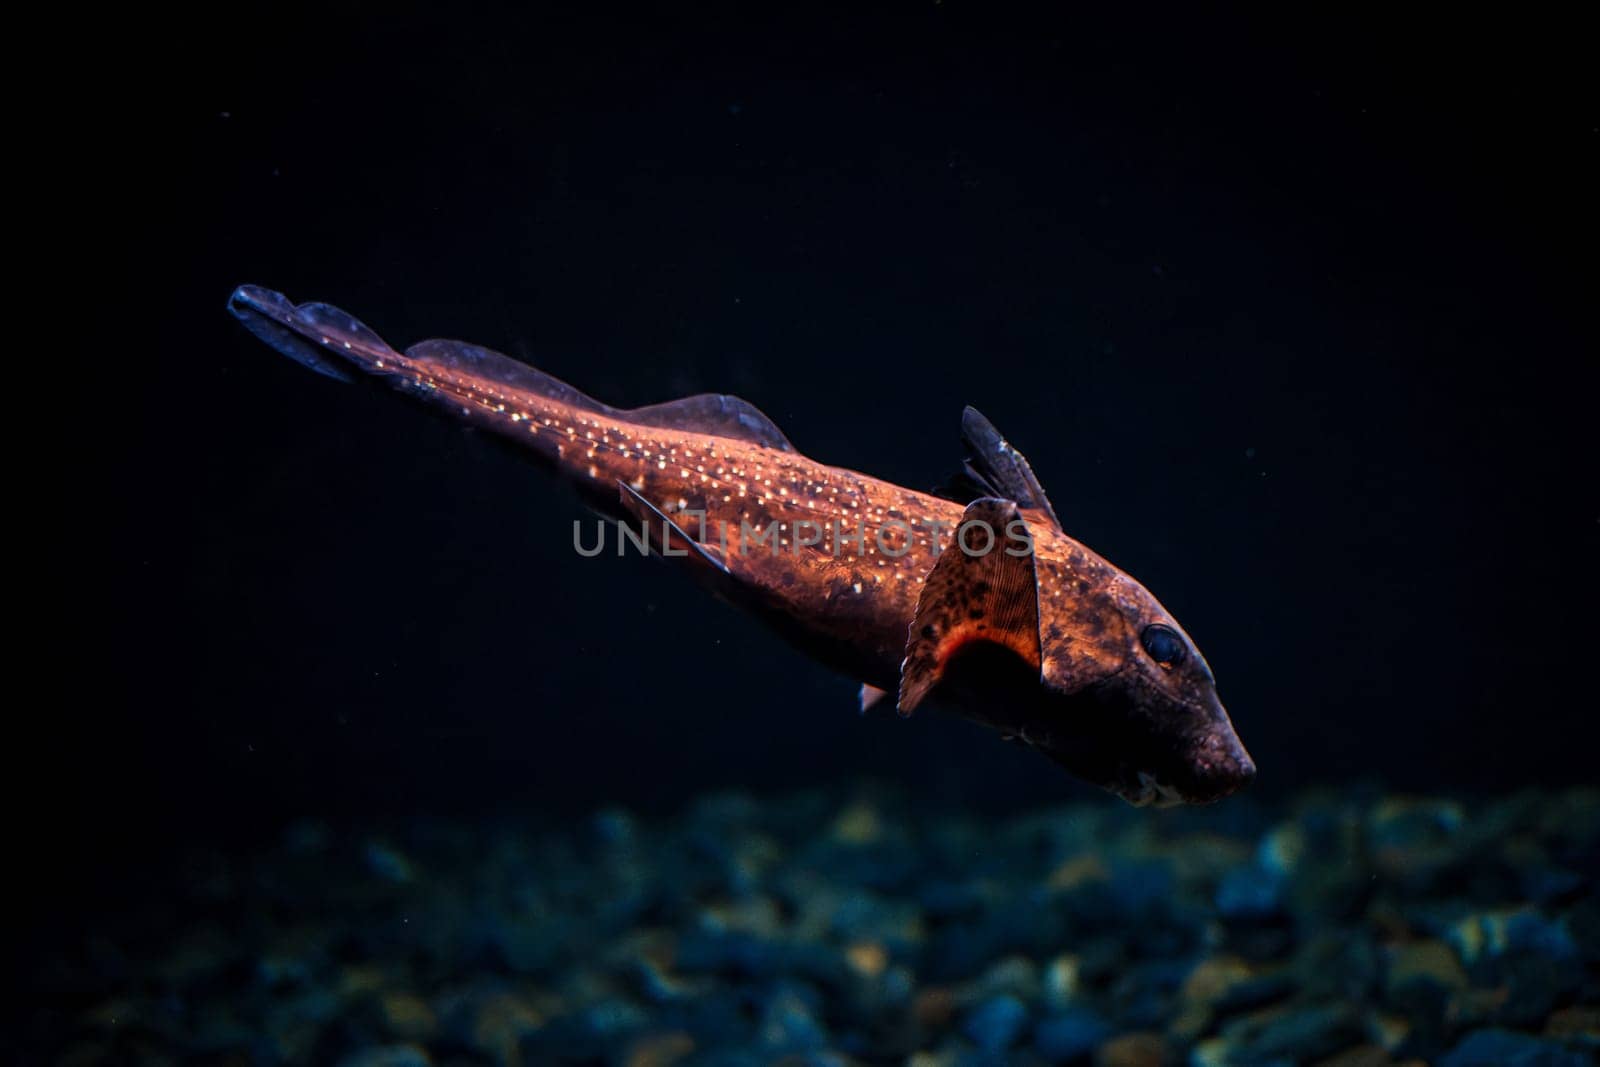 Spotted ratfish Hydrolagus colliei underwater in sea